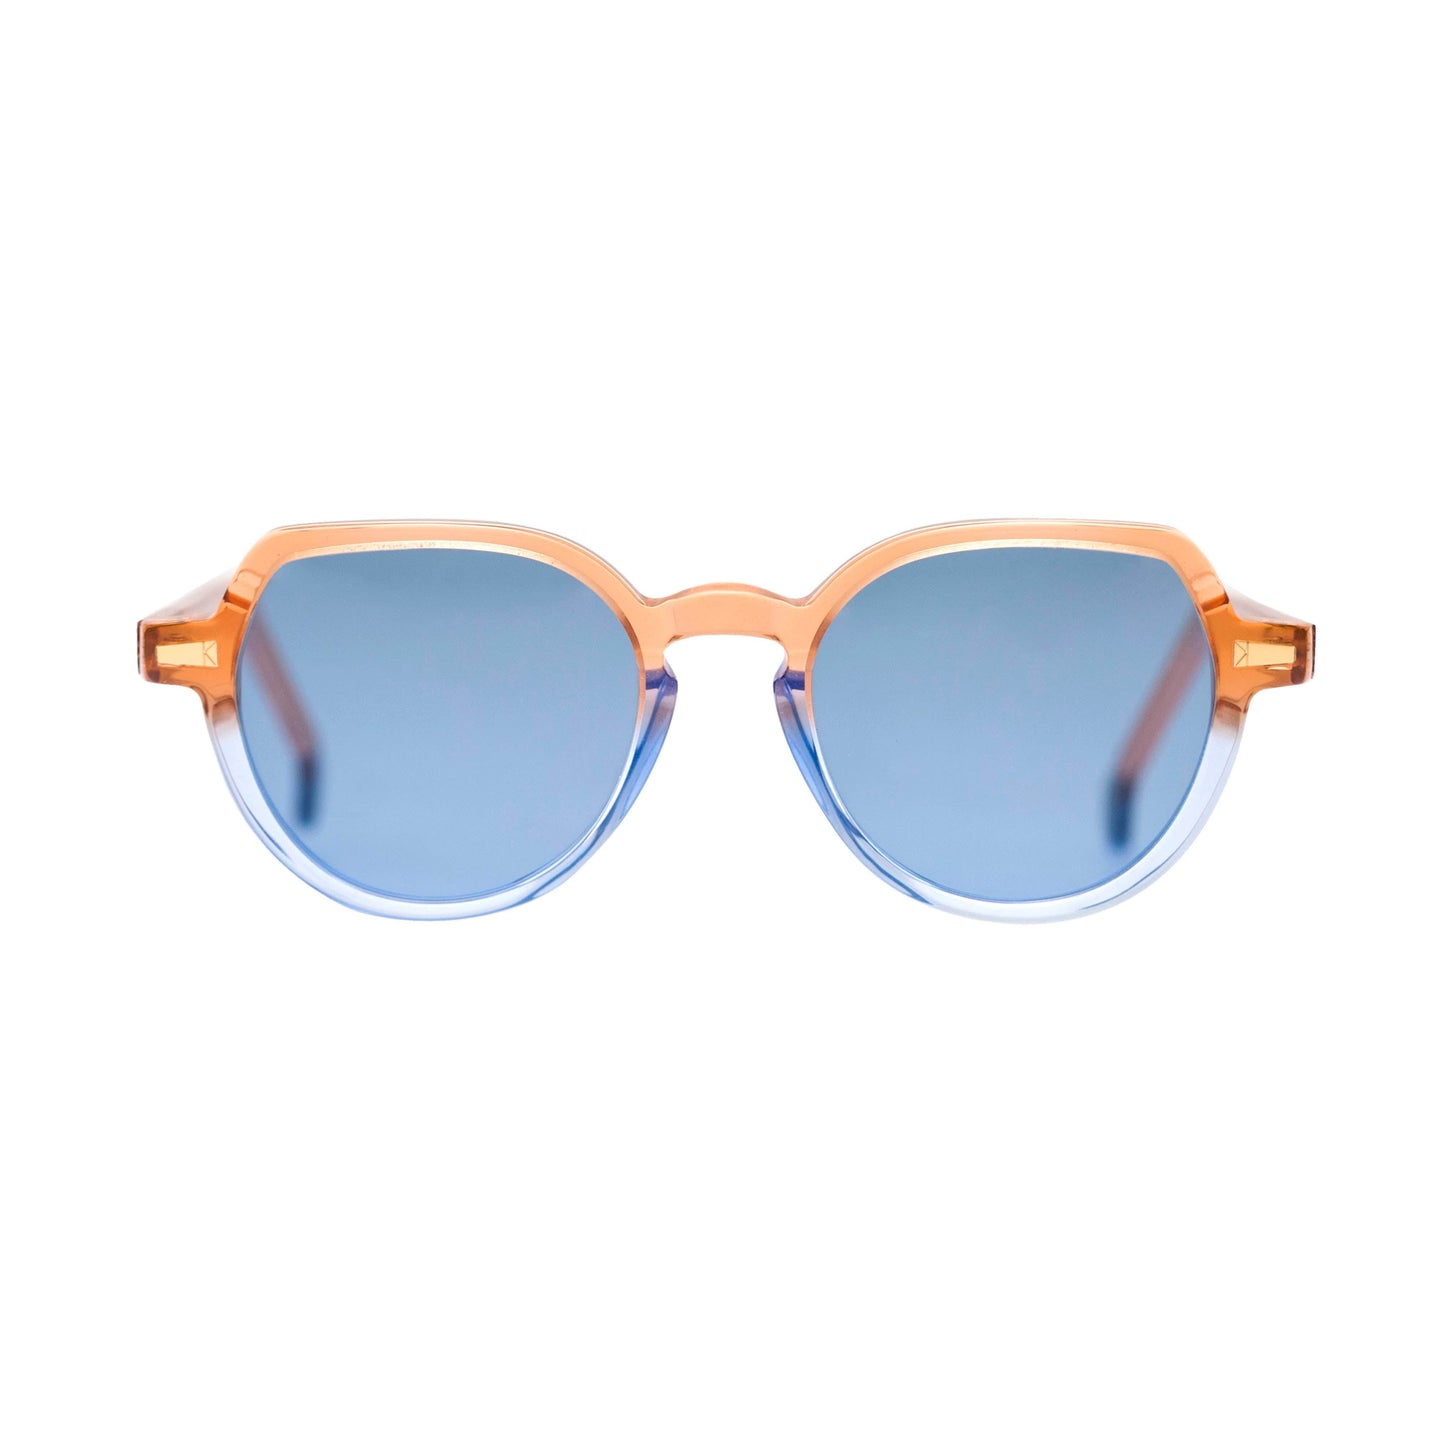 Kyme: Dafne - Spectaclo.com - eyewear store - Occhiali da sole - Sfumato arancio / Gatta / 47